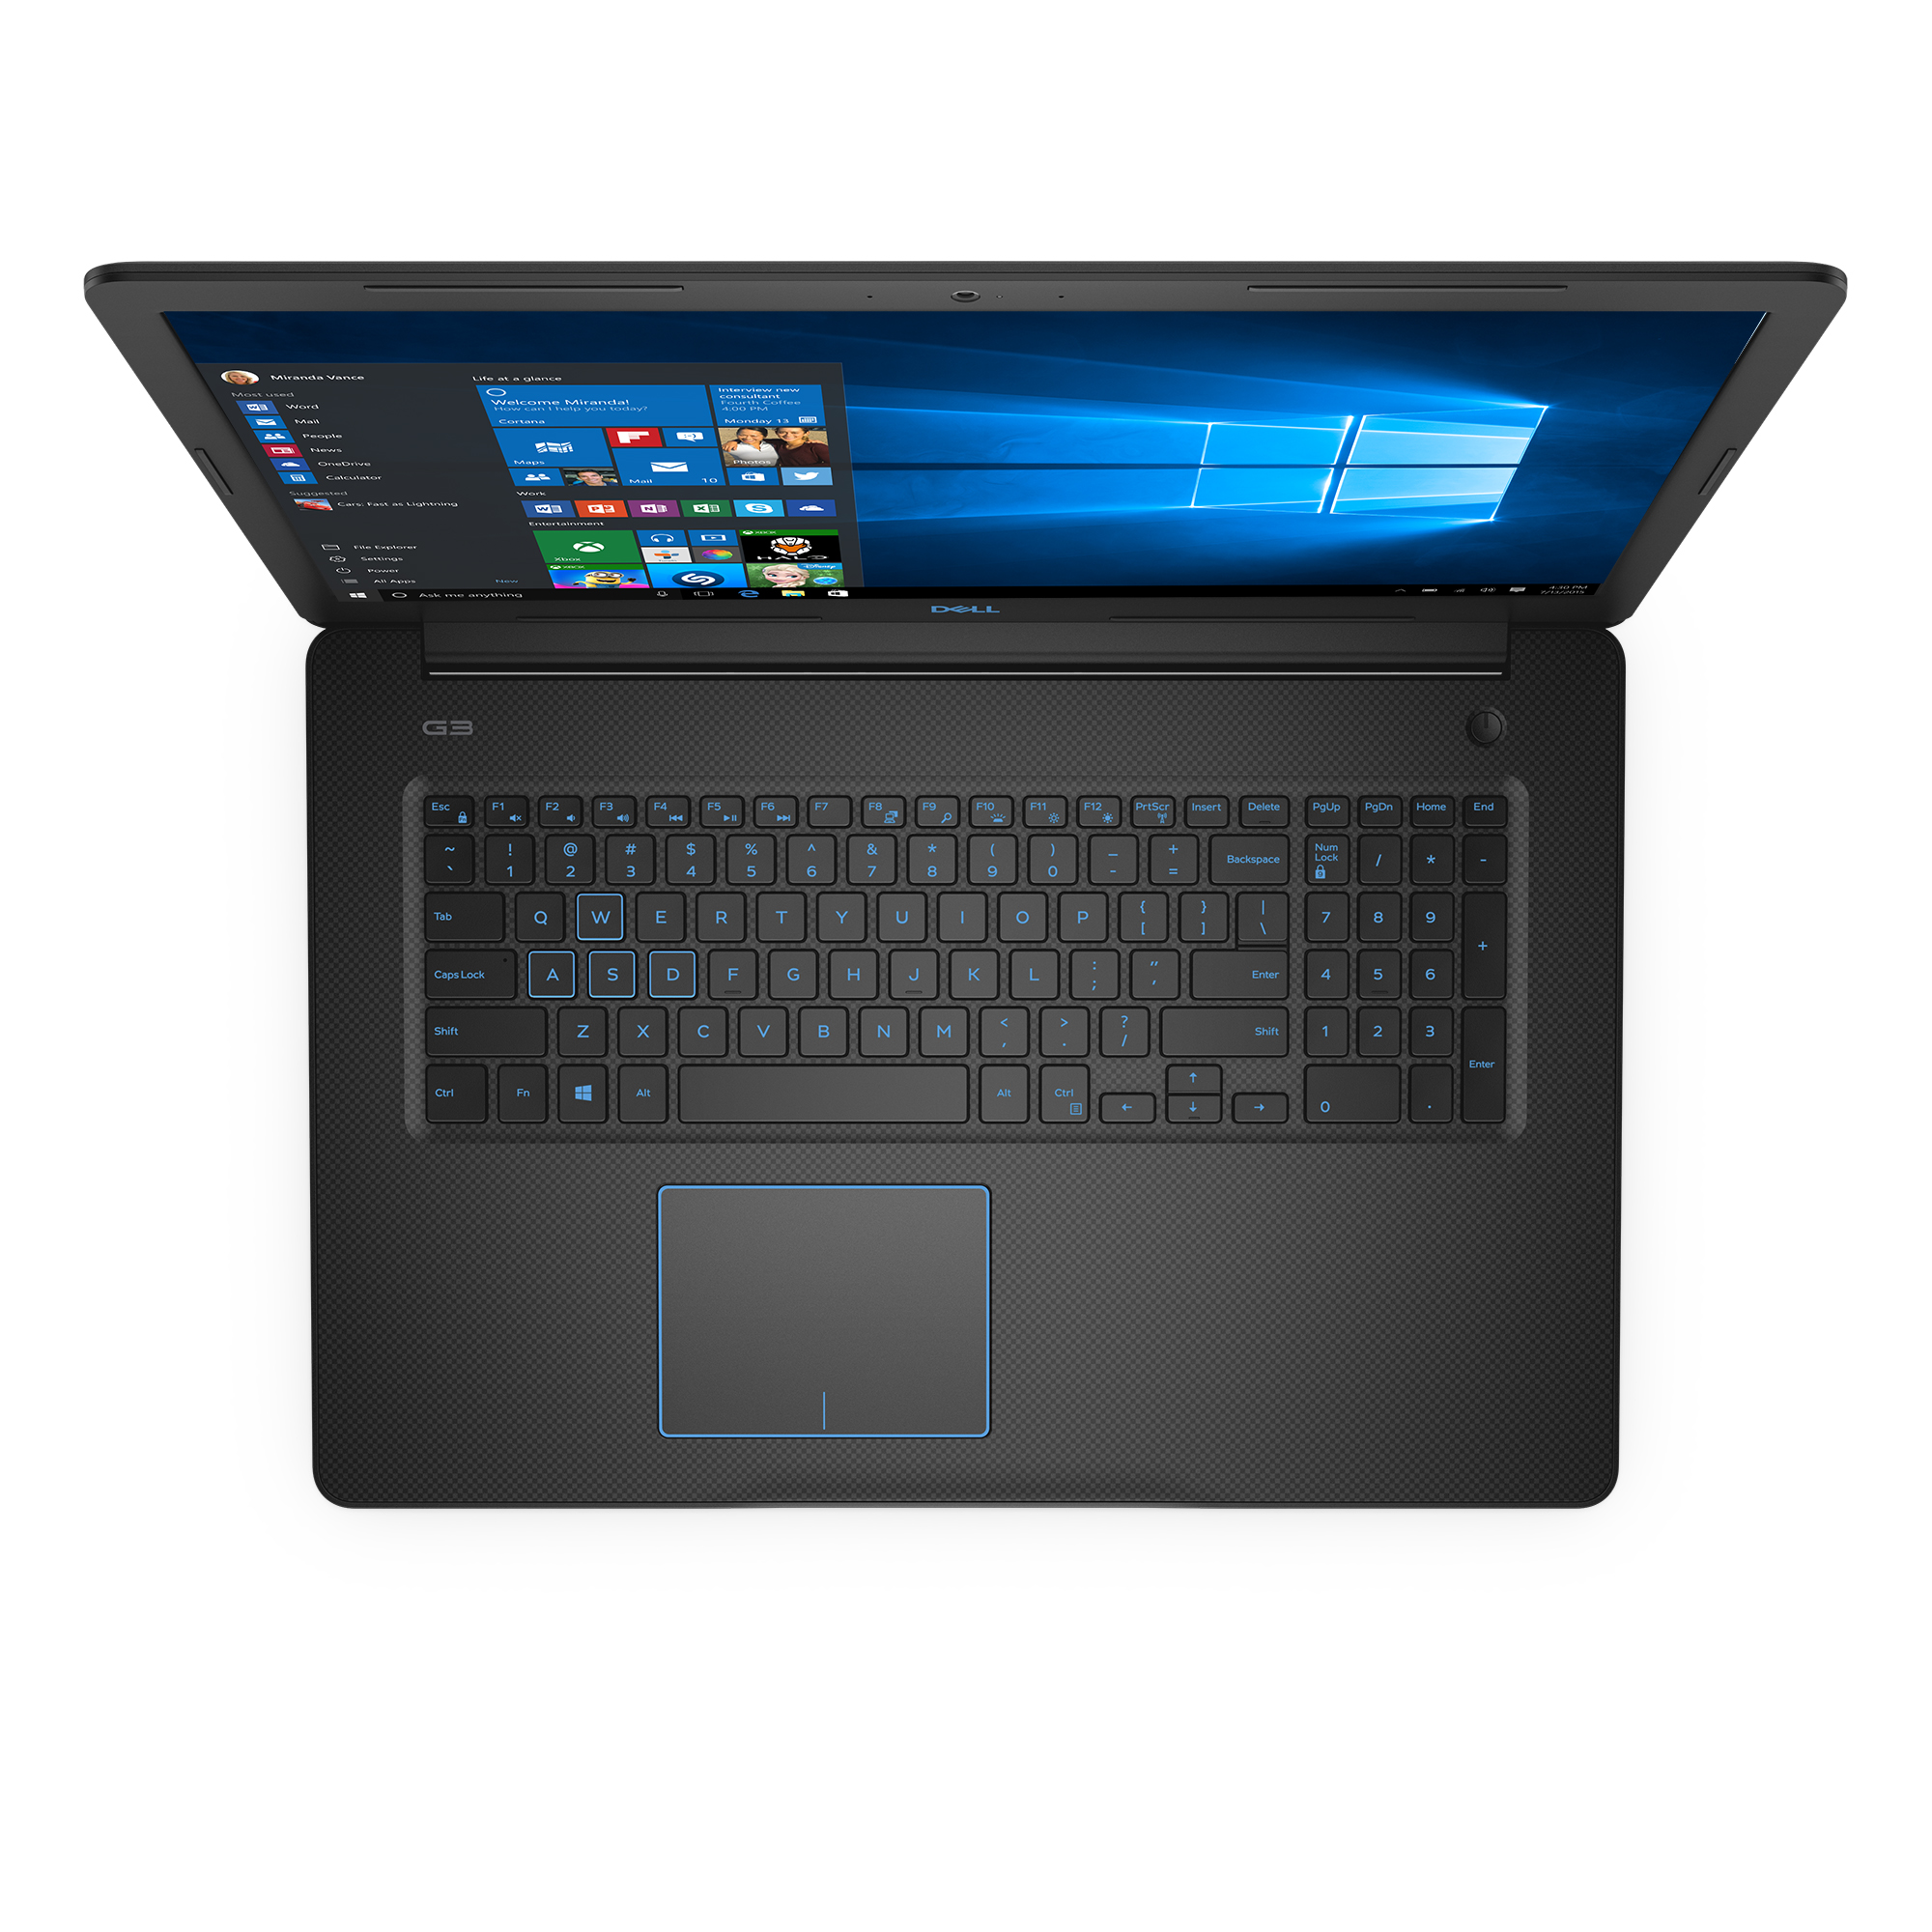 Dell G3 Gaming Laptop 17.3" Intel Core i7-8750H, NVIDIA GeForce GTX 1050Ti, 16GB RAM, 128GB SSD + 1TB HDD WIN 10, G3779-7927BLK-PUS - image 2 of 8